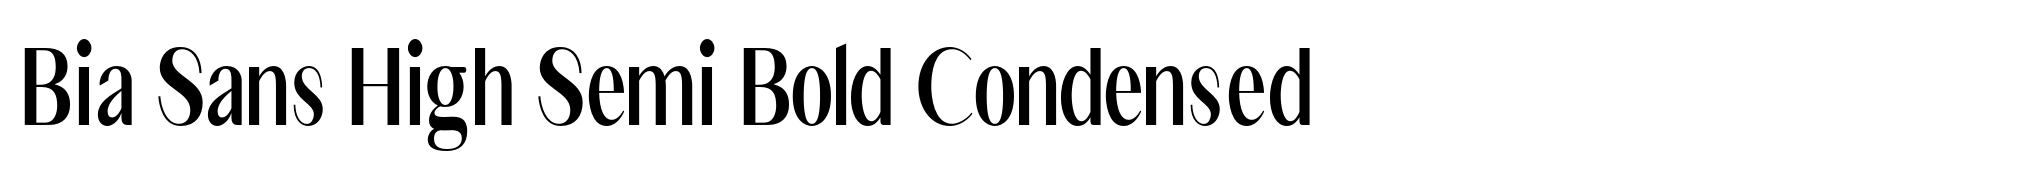 Bia Sans High Semi Bold Condensed image